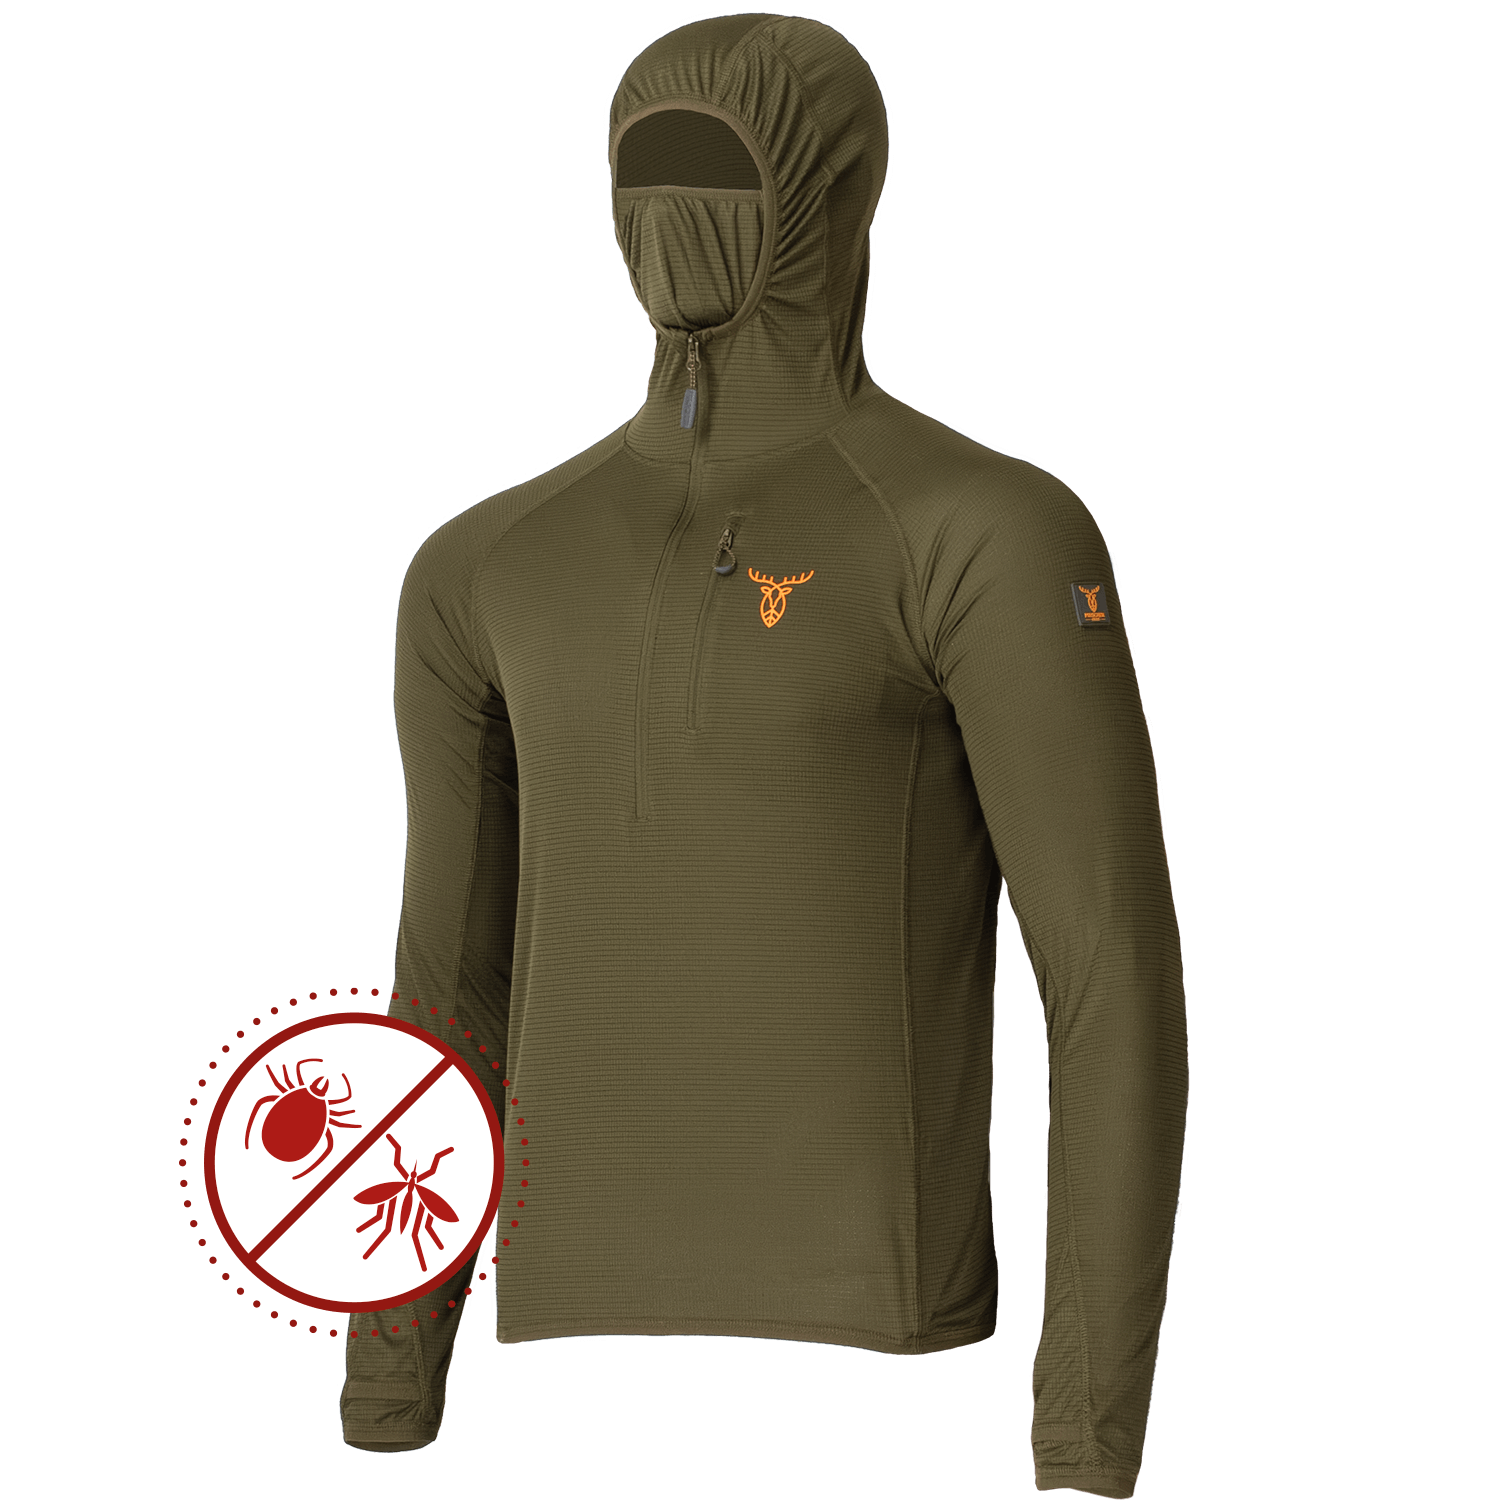 Pirscher Gear Ultralight Tanatex Hoodie Shirt - Men's Hunting Clothing